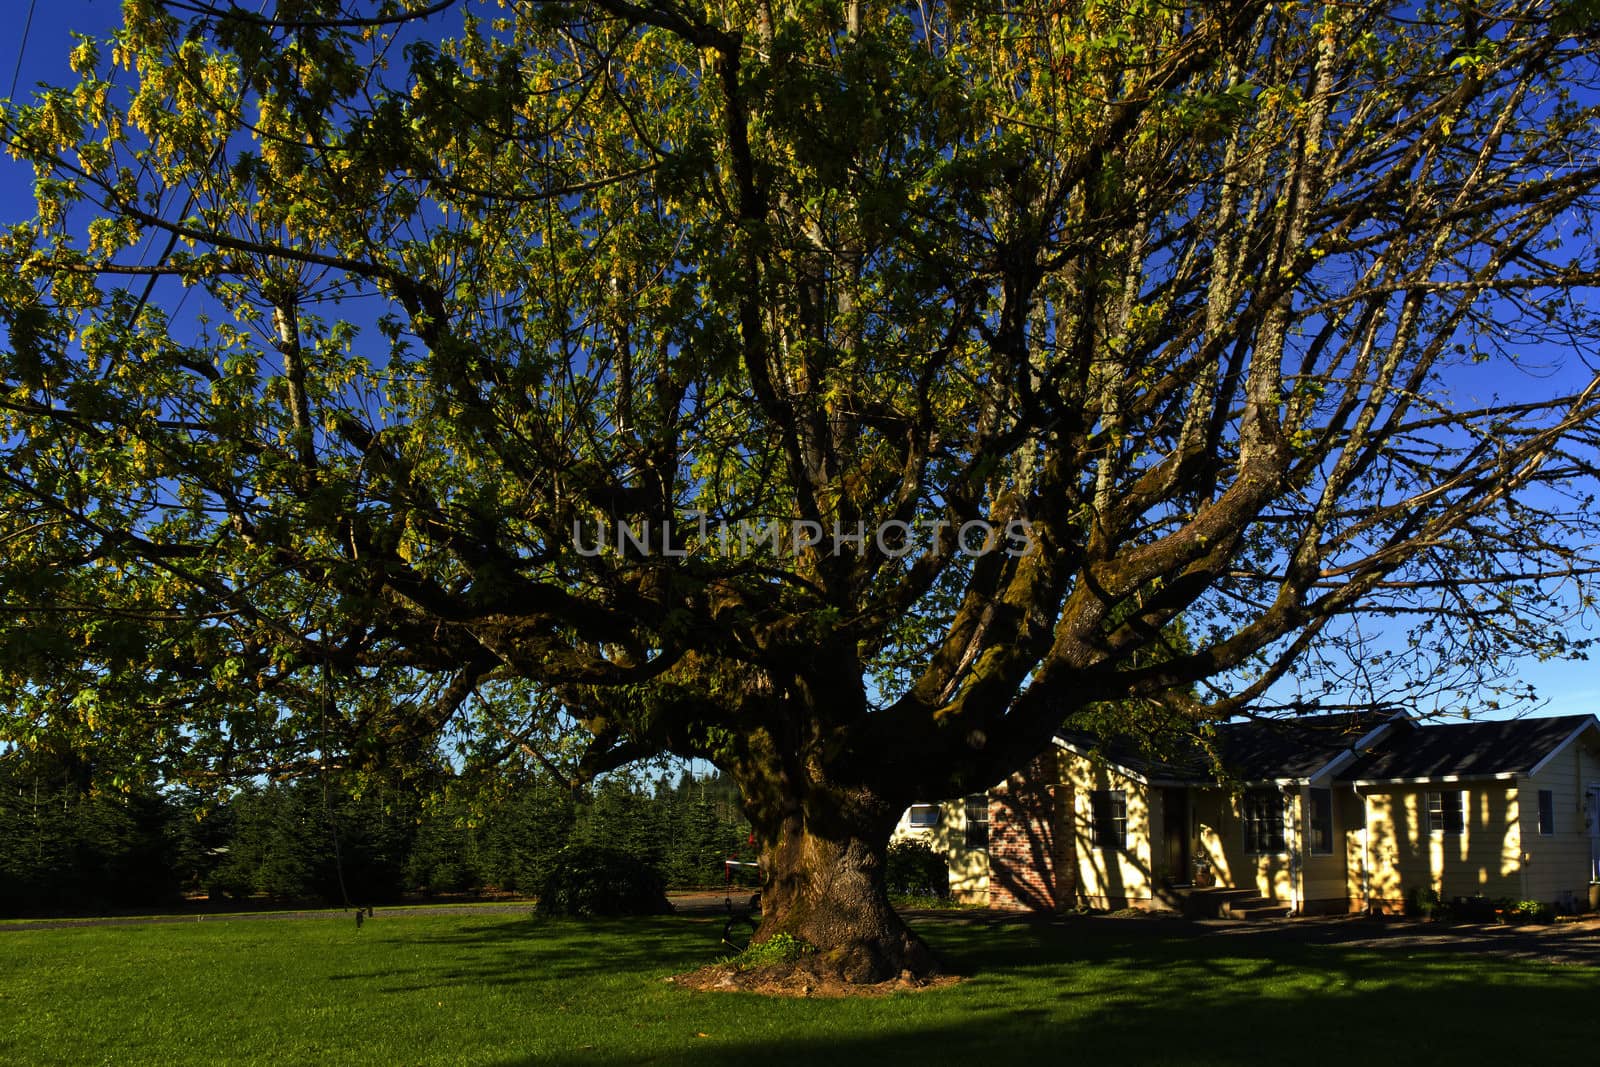 Large tree in a yard in rural Oregon.